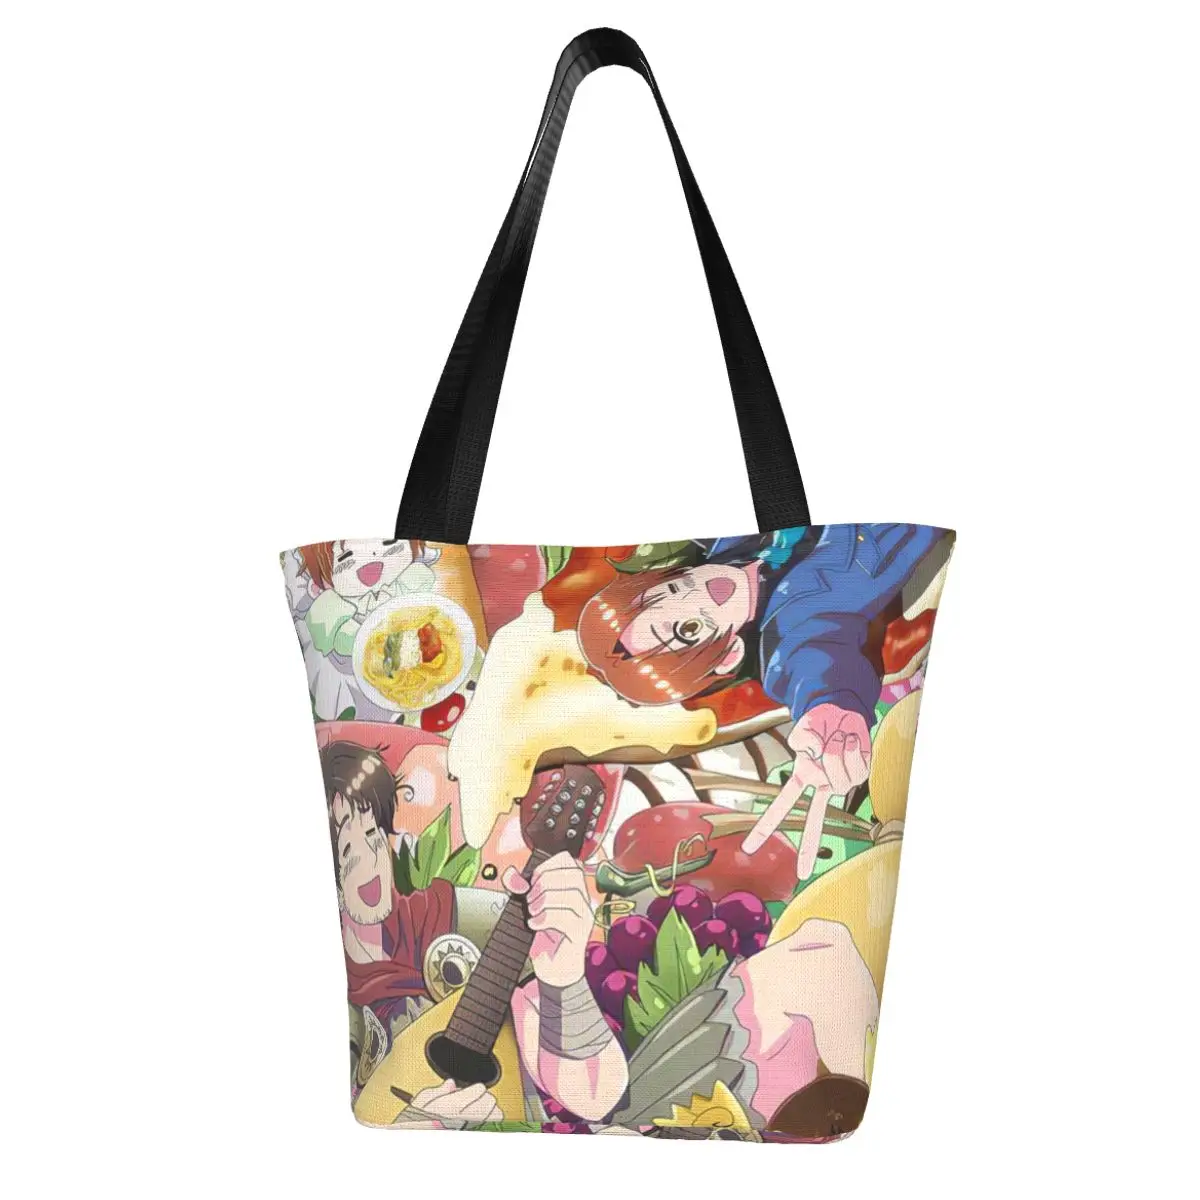 Axis Power Hetalia Shopping Bag Aesthetic Cloth Outdoor Handbag Female Fashion Bags